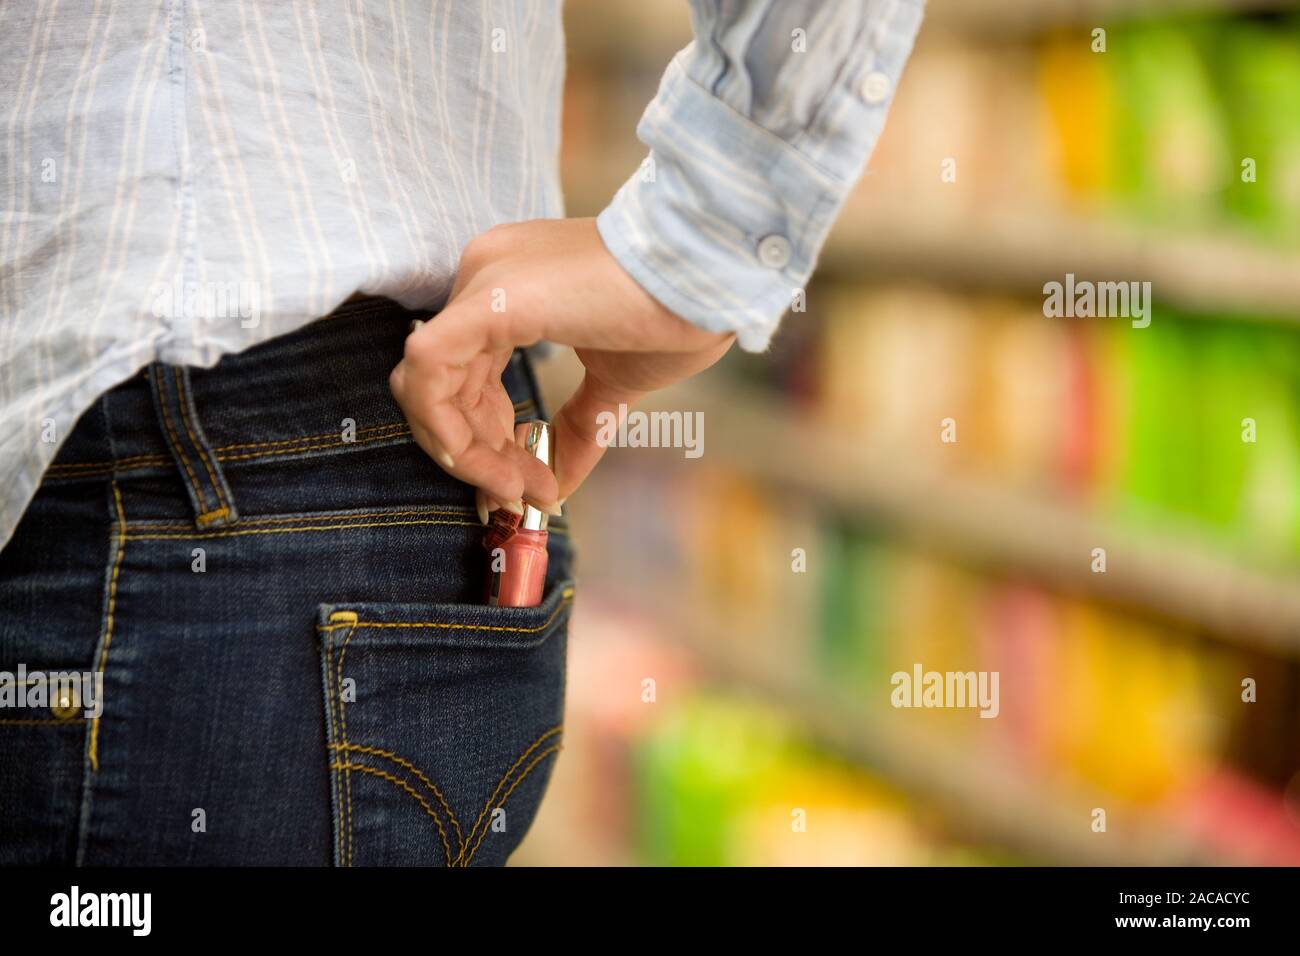 shoplifting Stock Photo